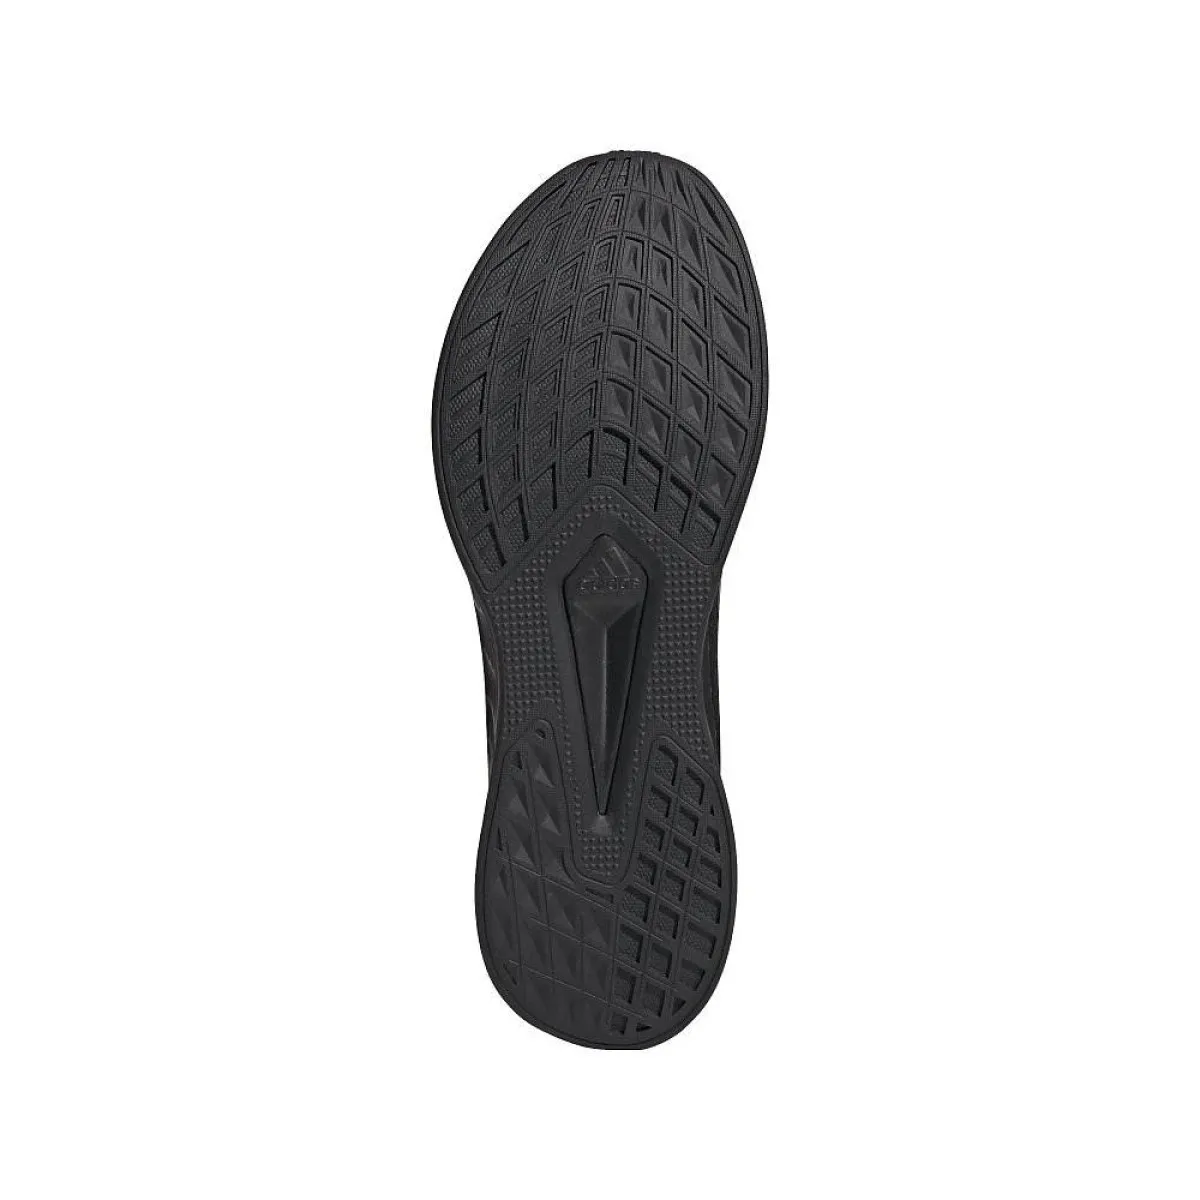 adidas Duramo Protect sports shoes black